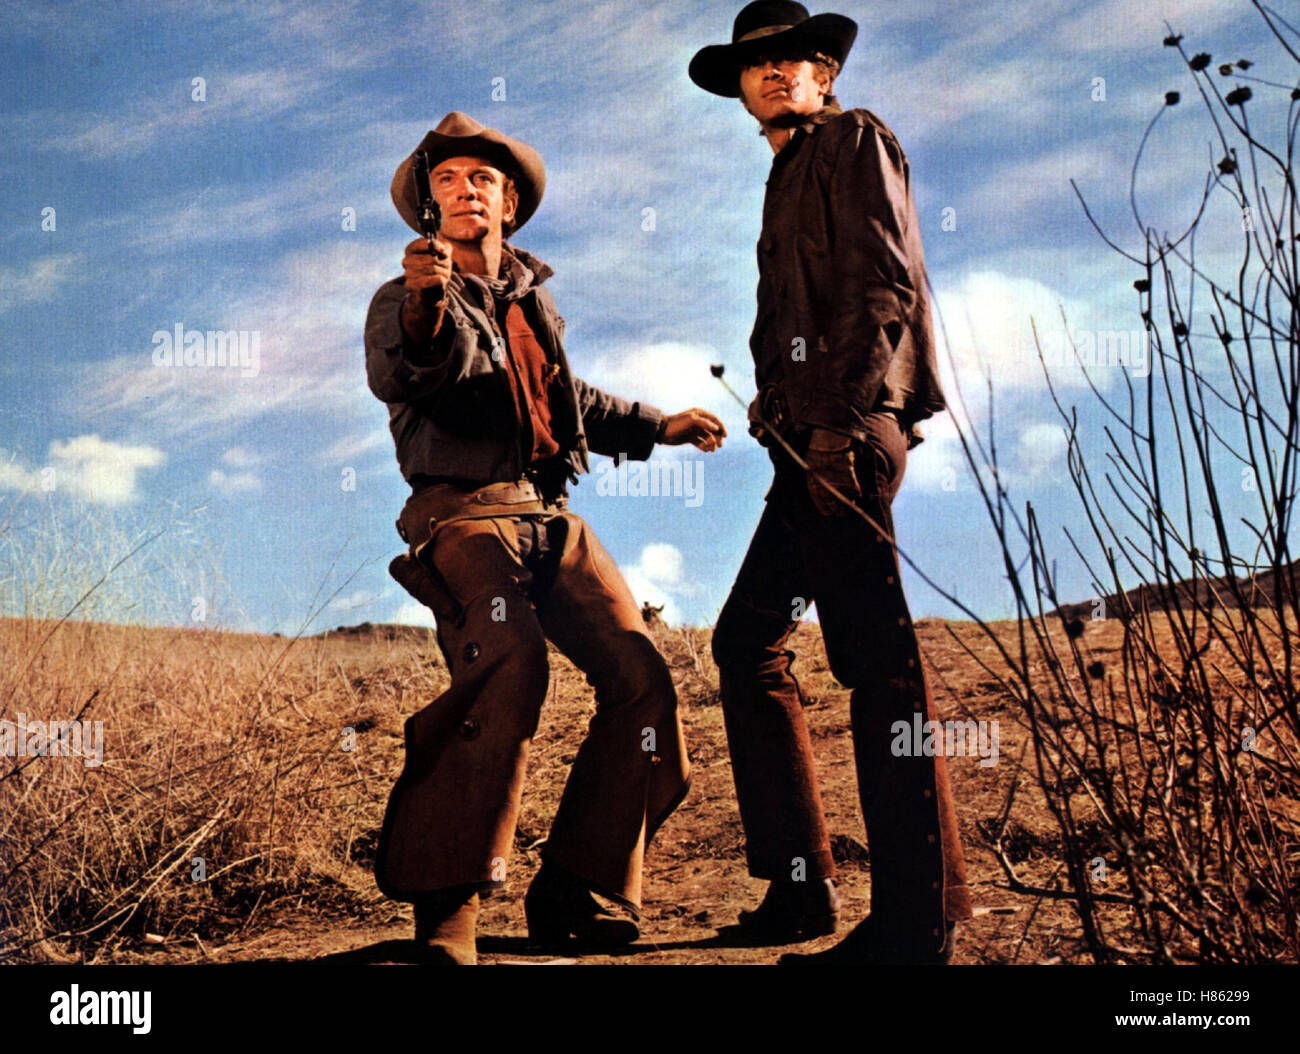 Sein Name war Gannon, (A MAN CALLED GANNON) USA 1969, Regie: James Goldstone, TONY FRANCIOSA, MICHAEL SARRAZIN, Stichwort: Cowboy, Waffe Stock Photo